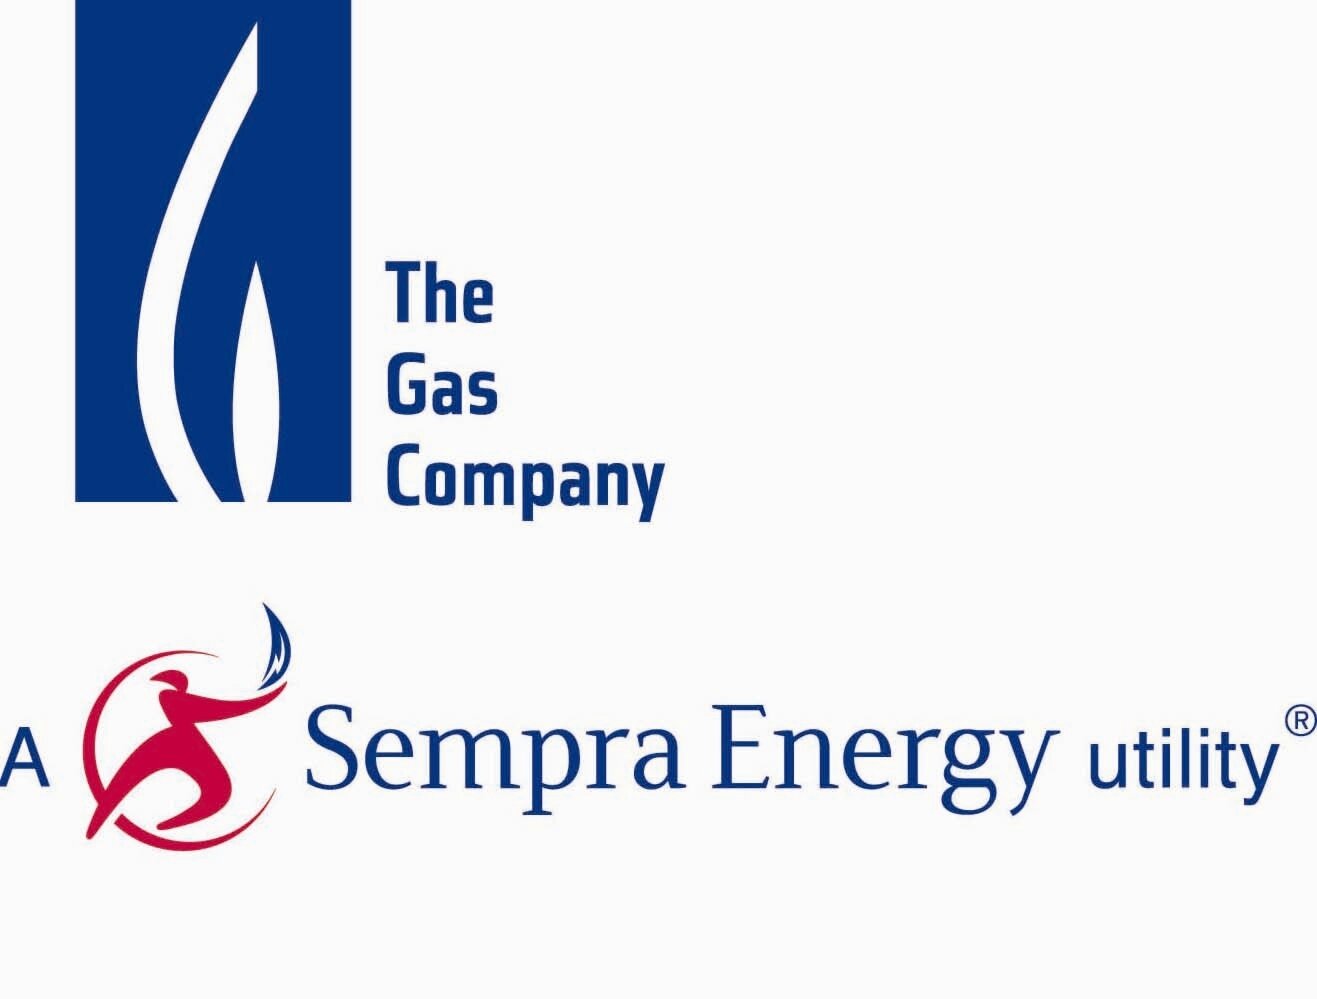 The Gas Company Logo.JPG